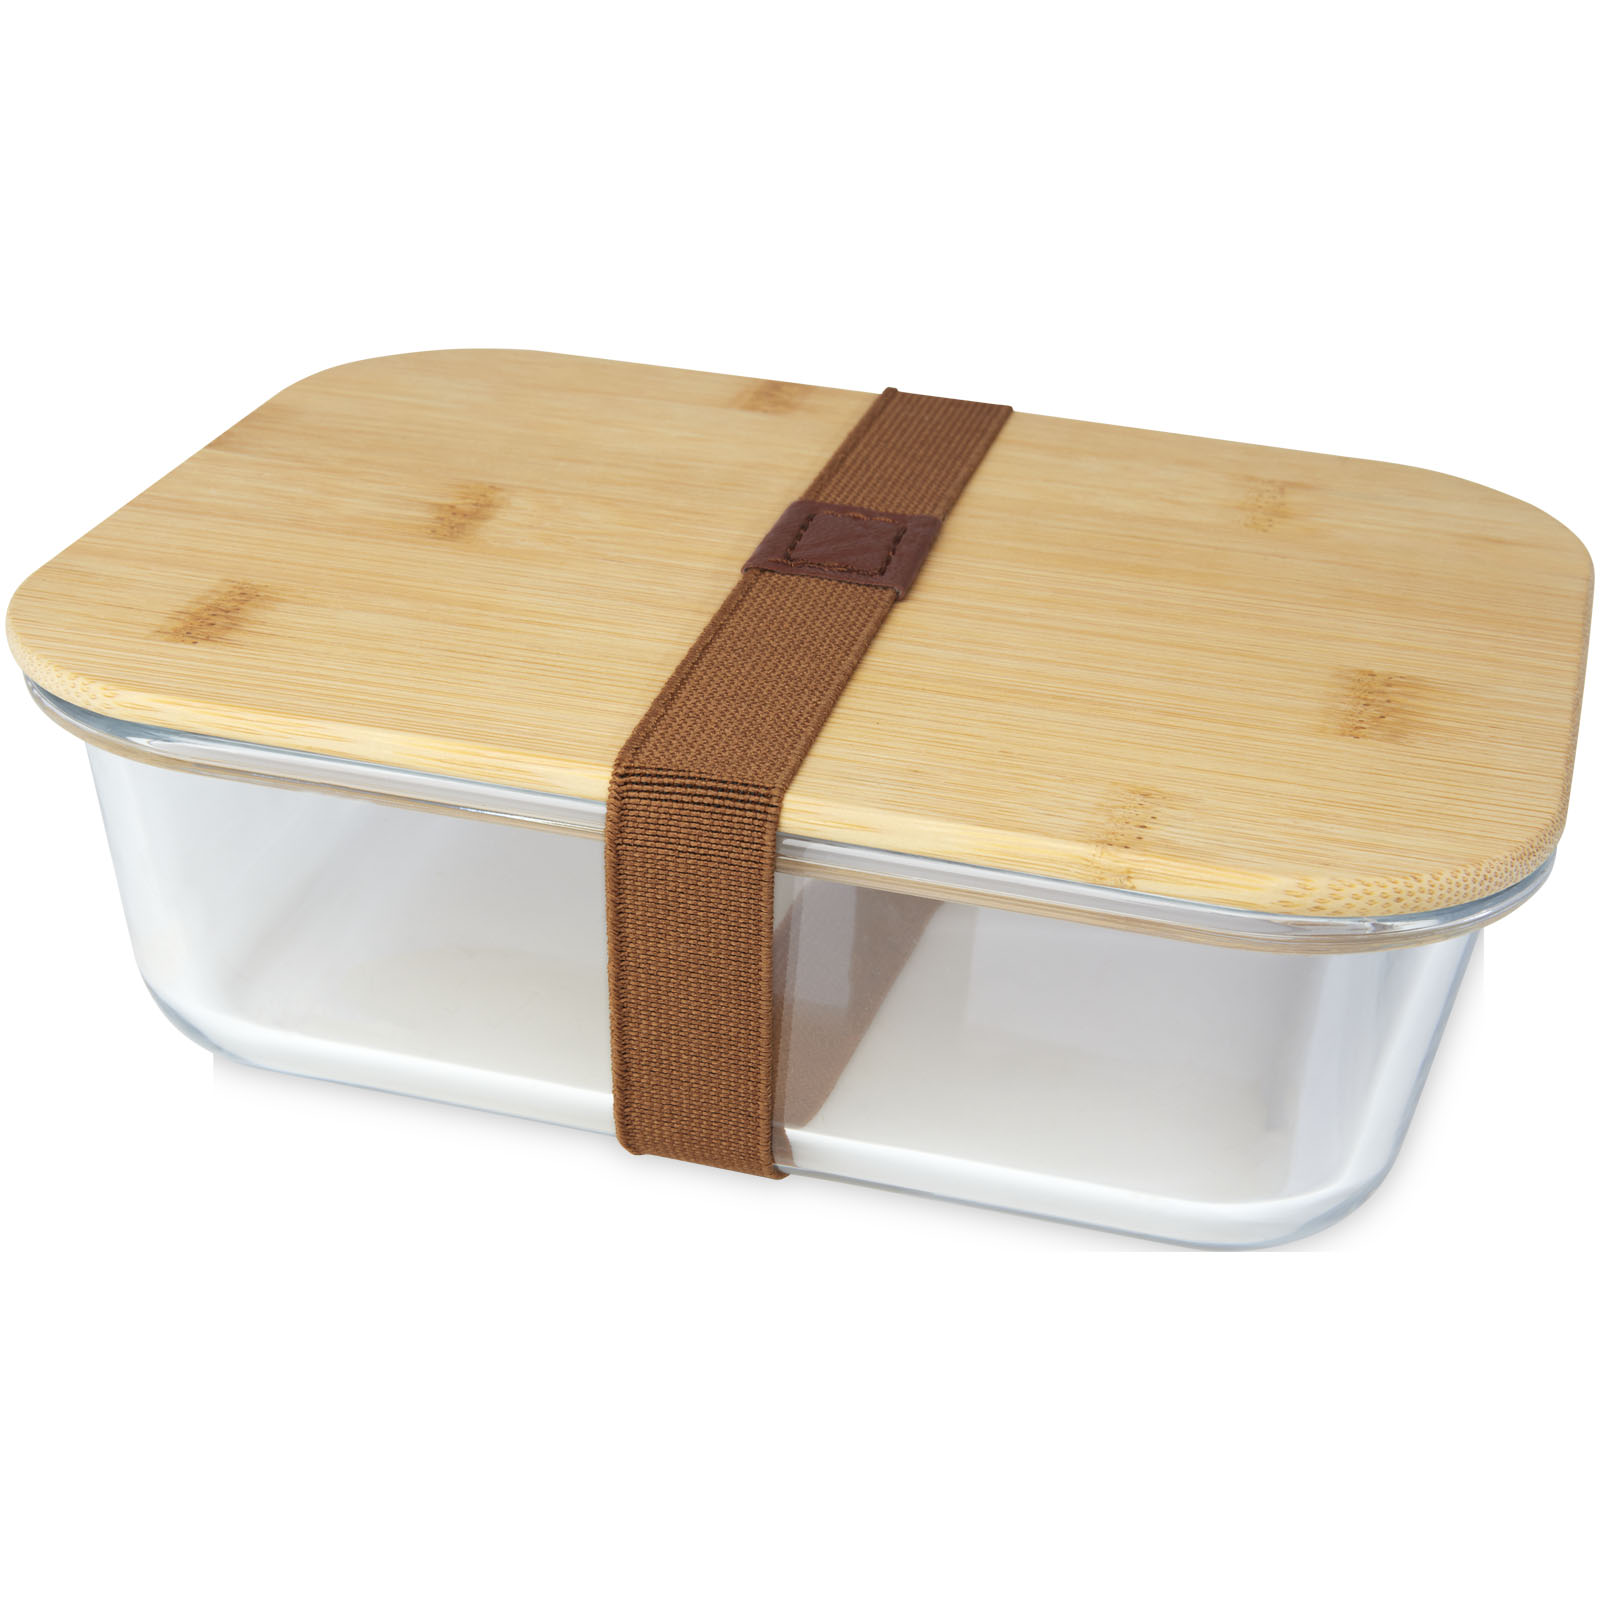 Caja de almuerzo de vidrio rubí con tapa de bambú - Torredonjimeno